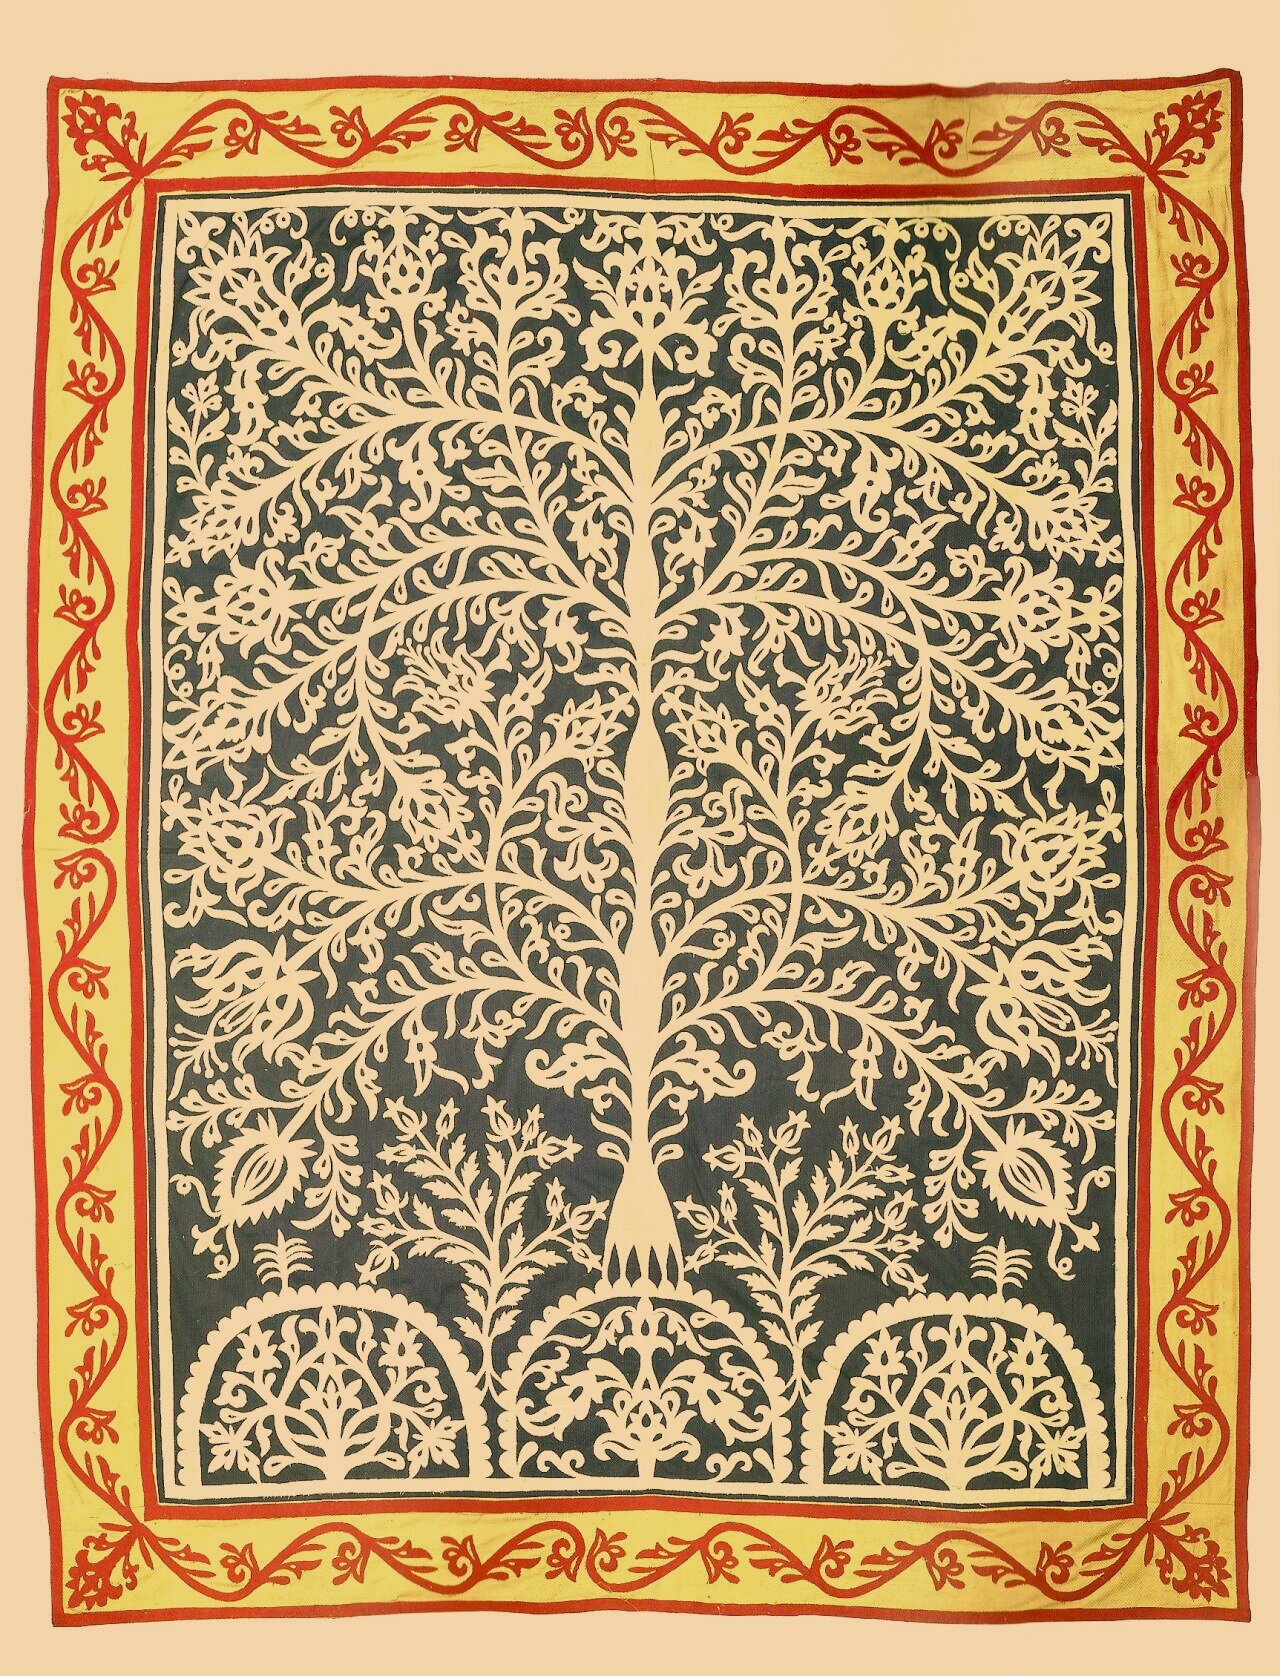 Tausug Tree of Life, mid-20th century